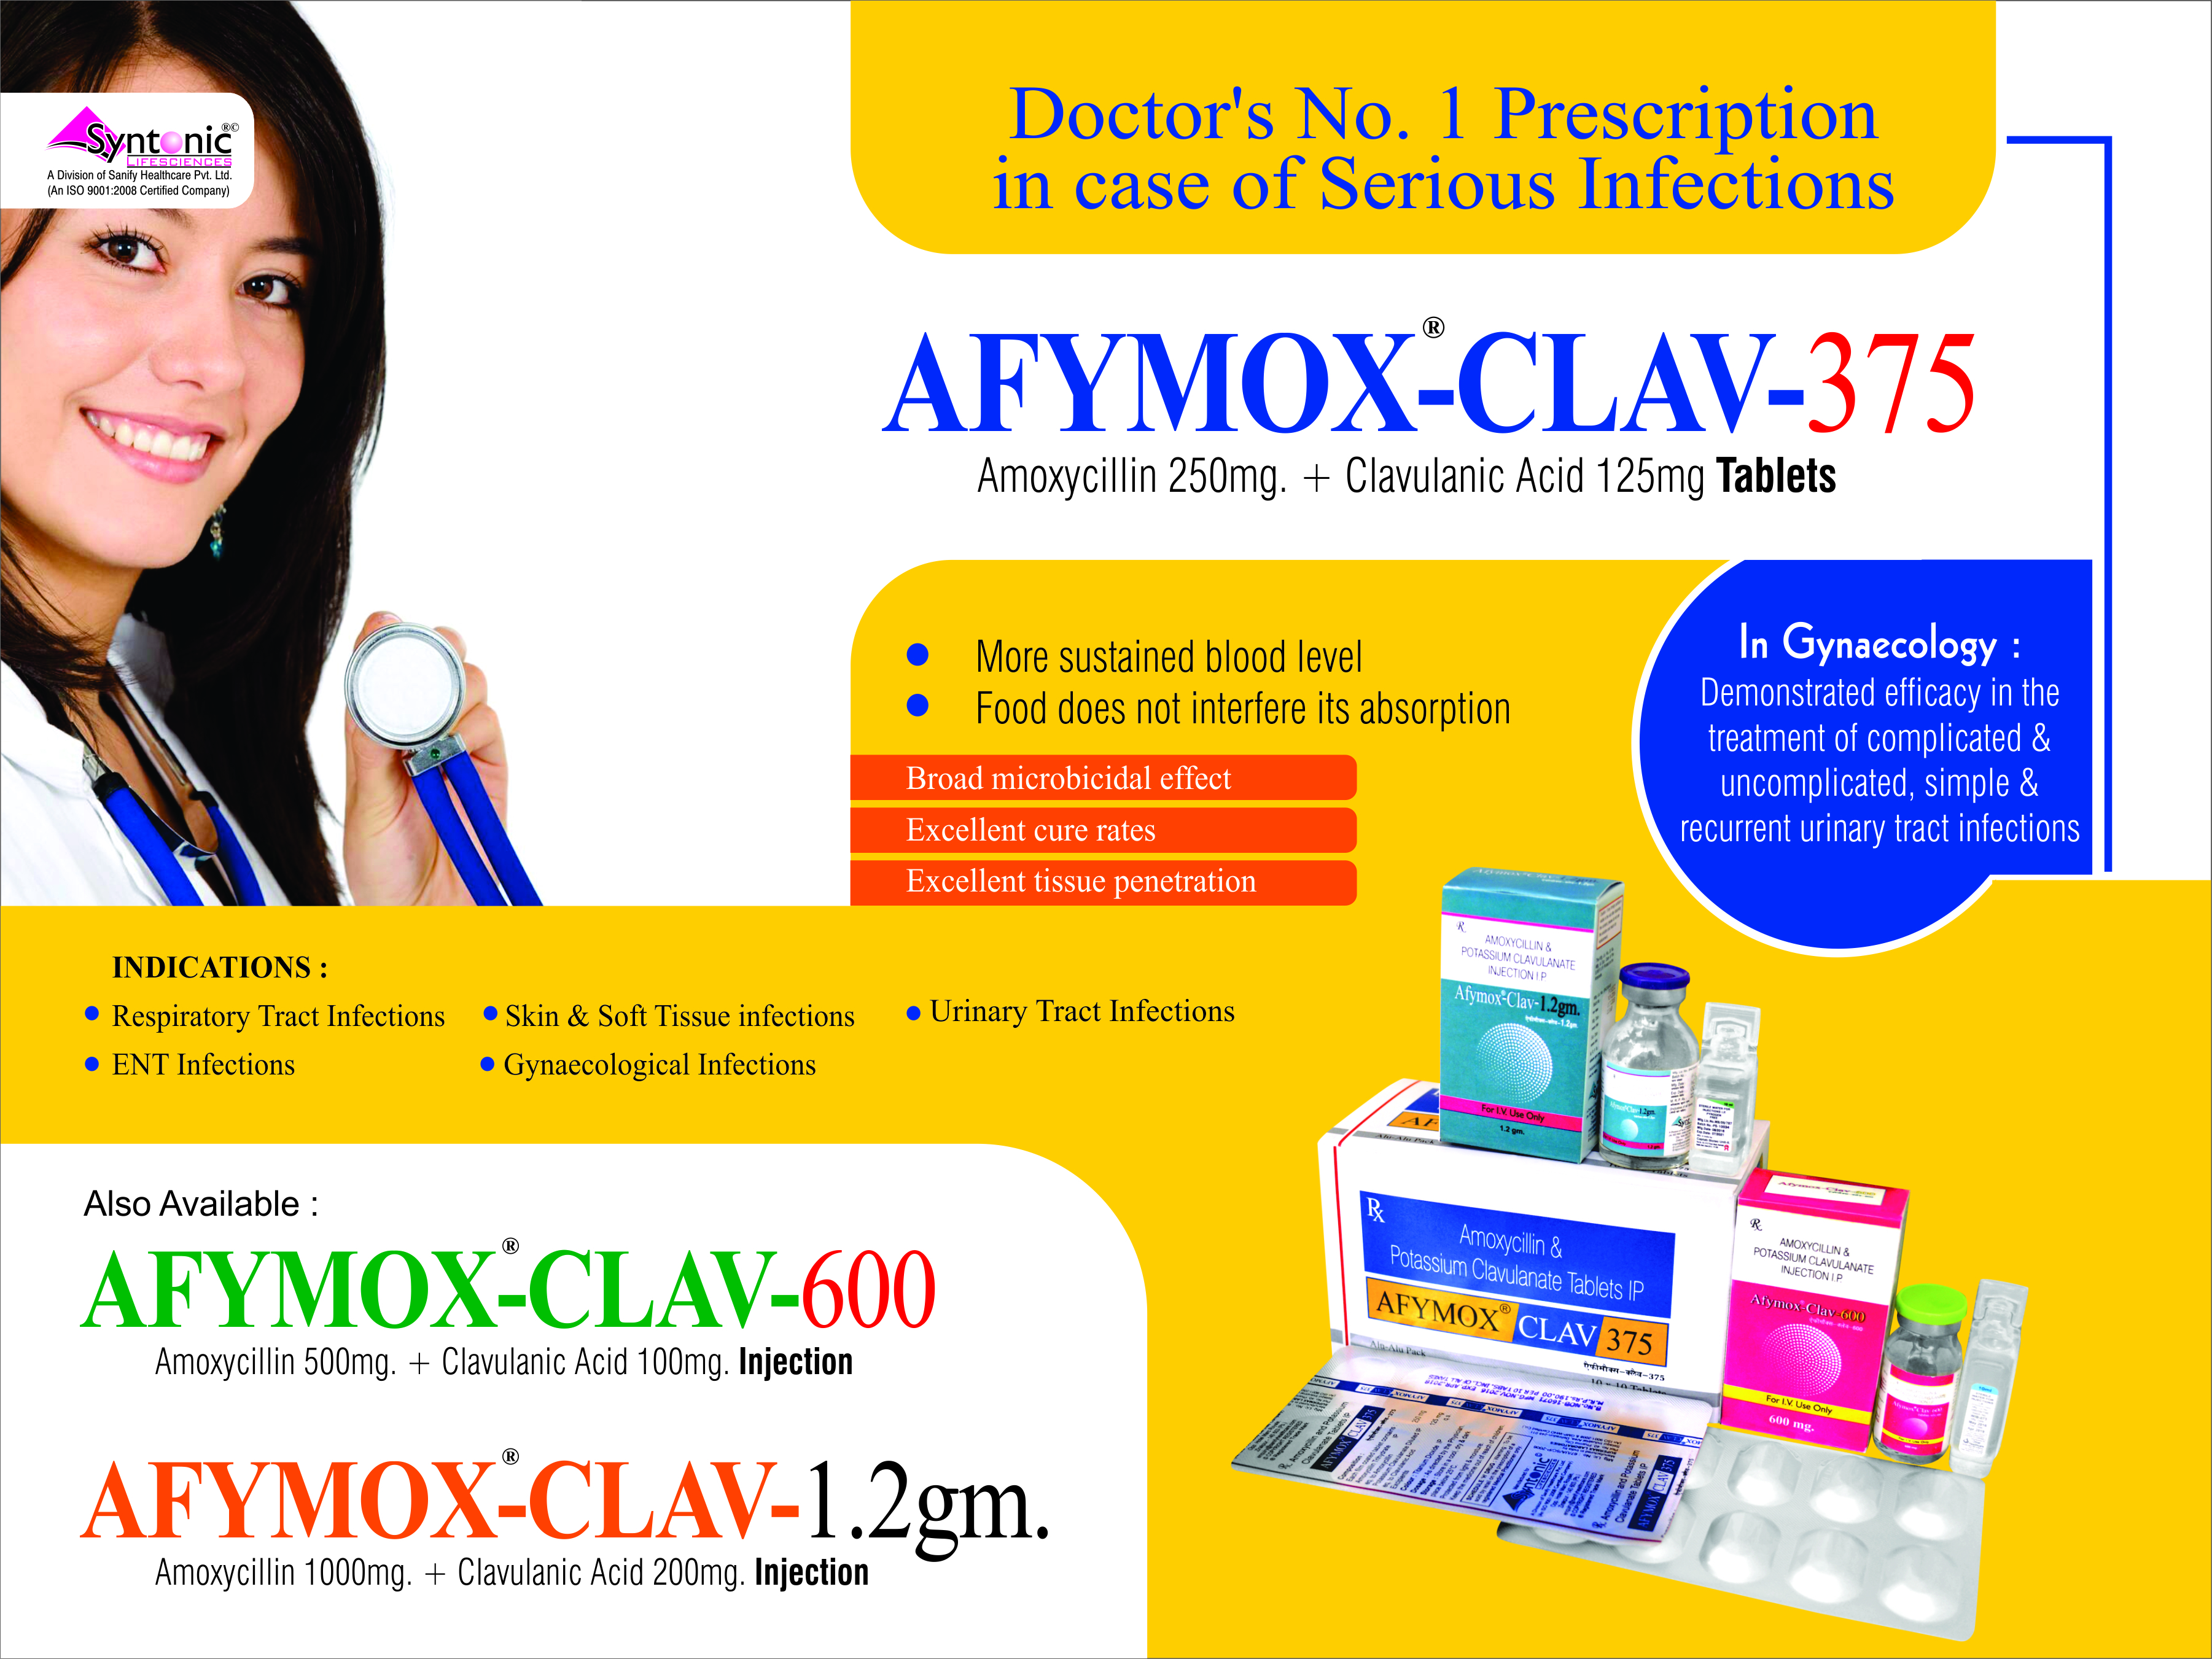 Amoxycillin 1gm + Clavulanate Pot. 200mg